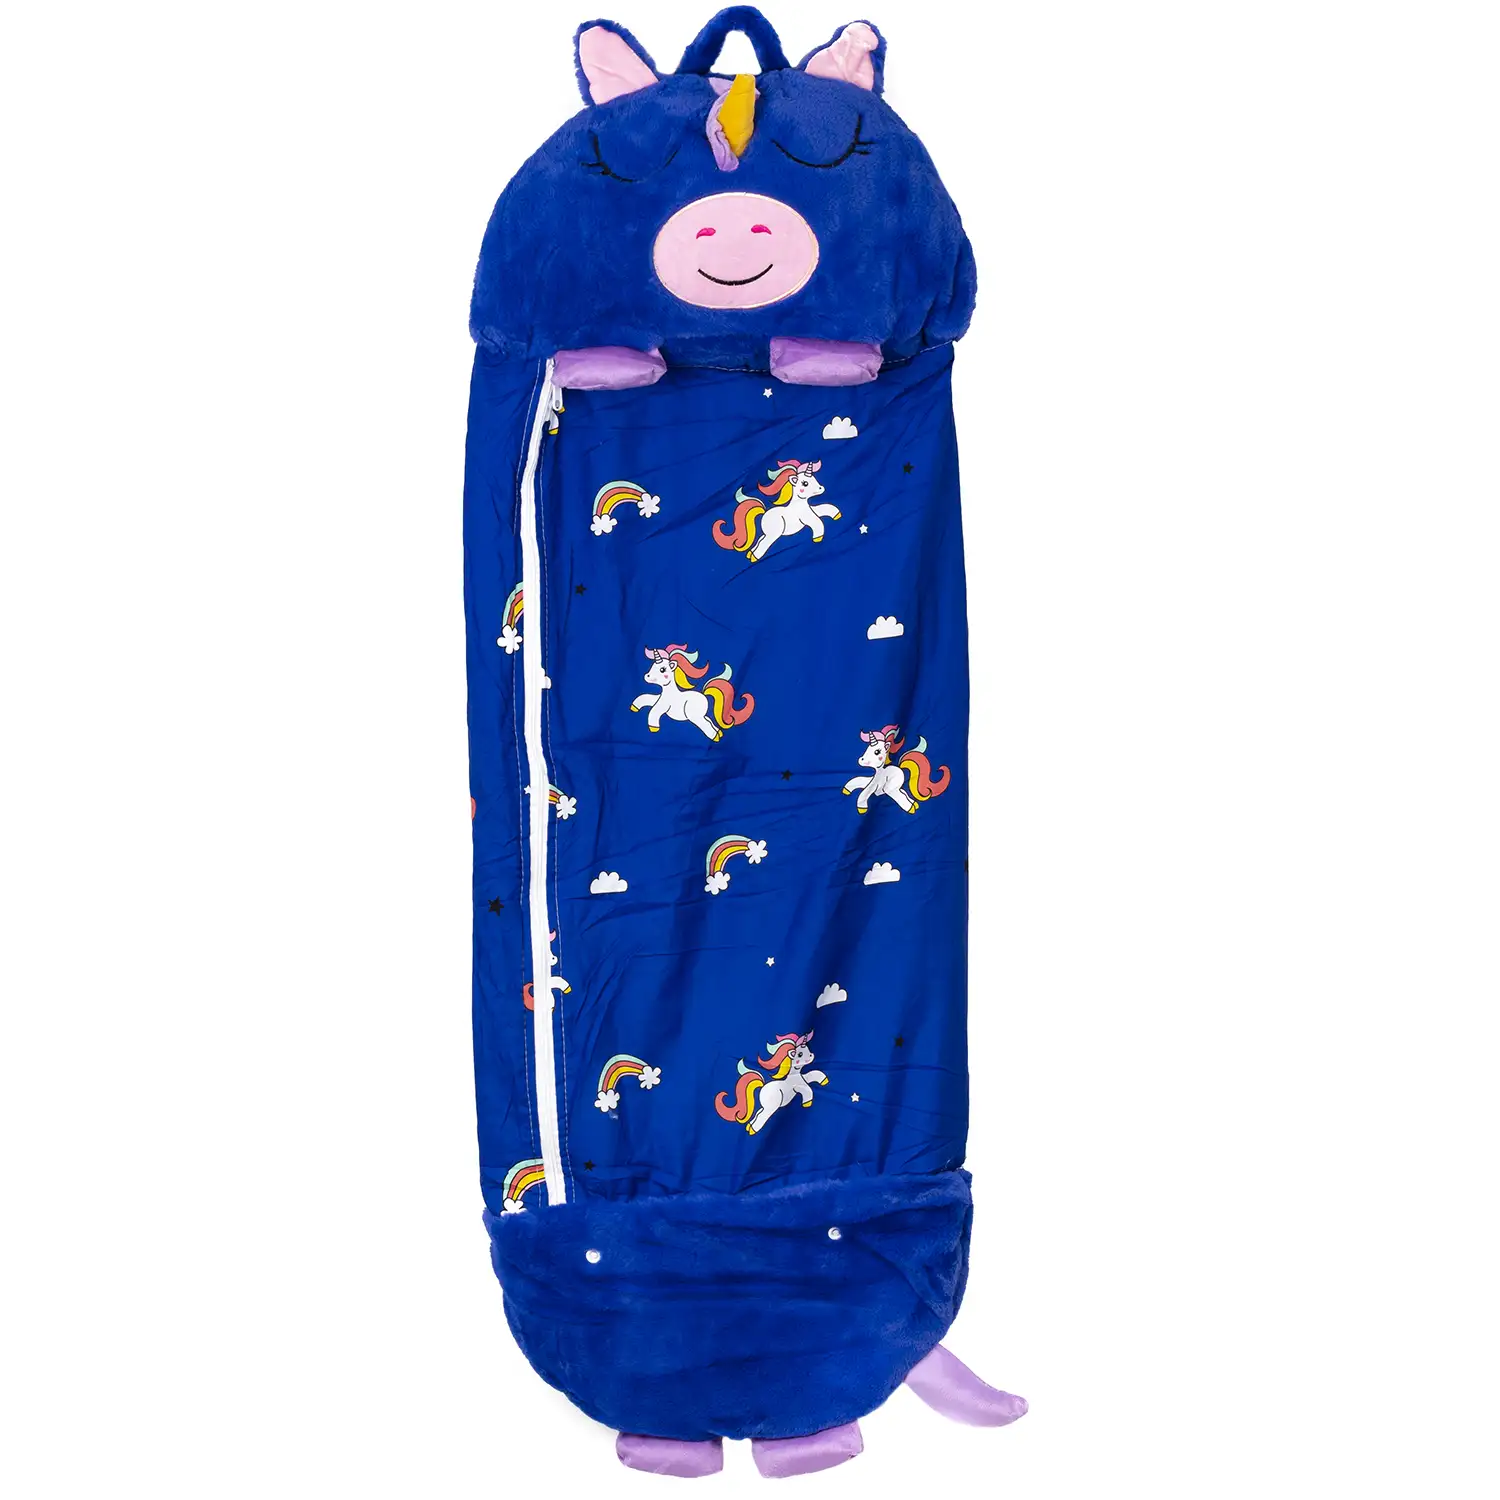 Saco de dormir convertible en almohada, para niños, Cerdicornio Azul Eléctrico. Tacto peluche. Pequeño / S: 128x45cm.